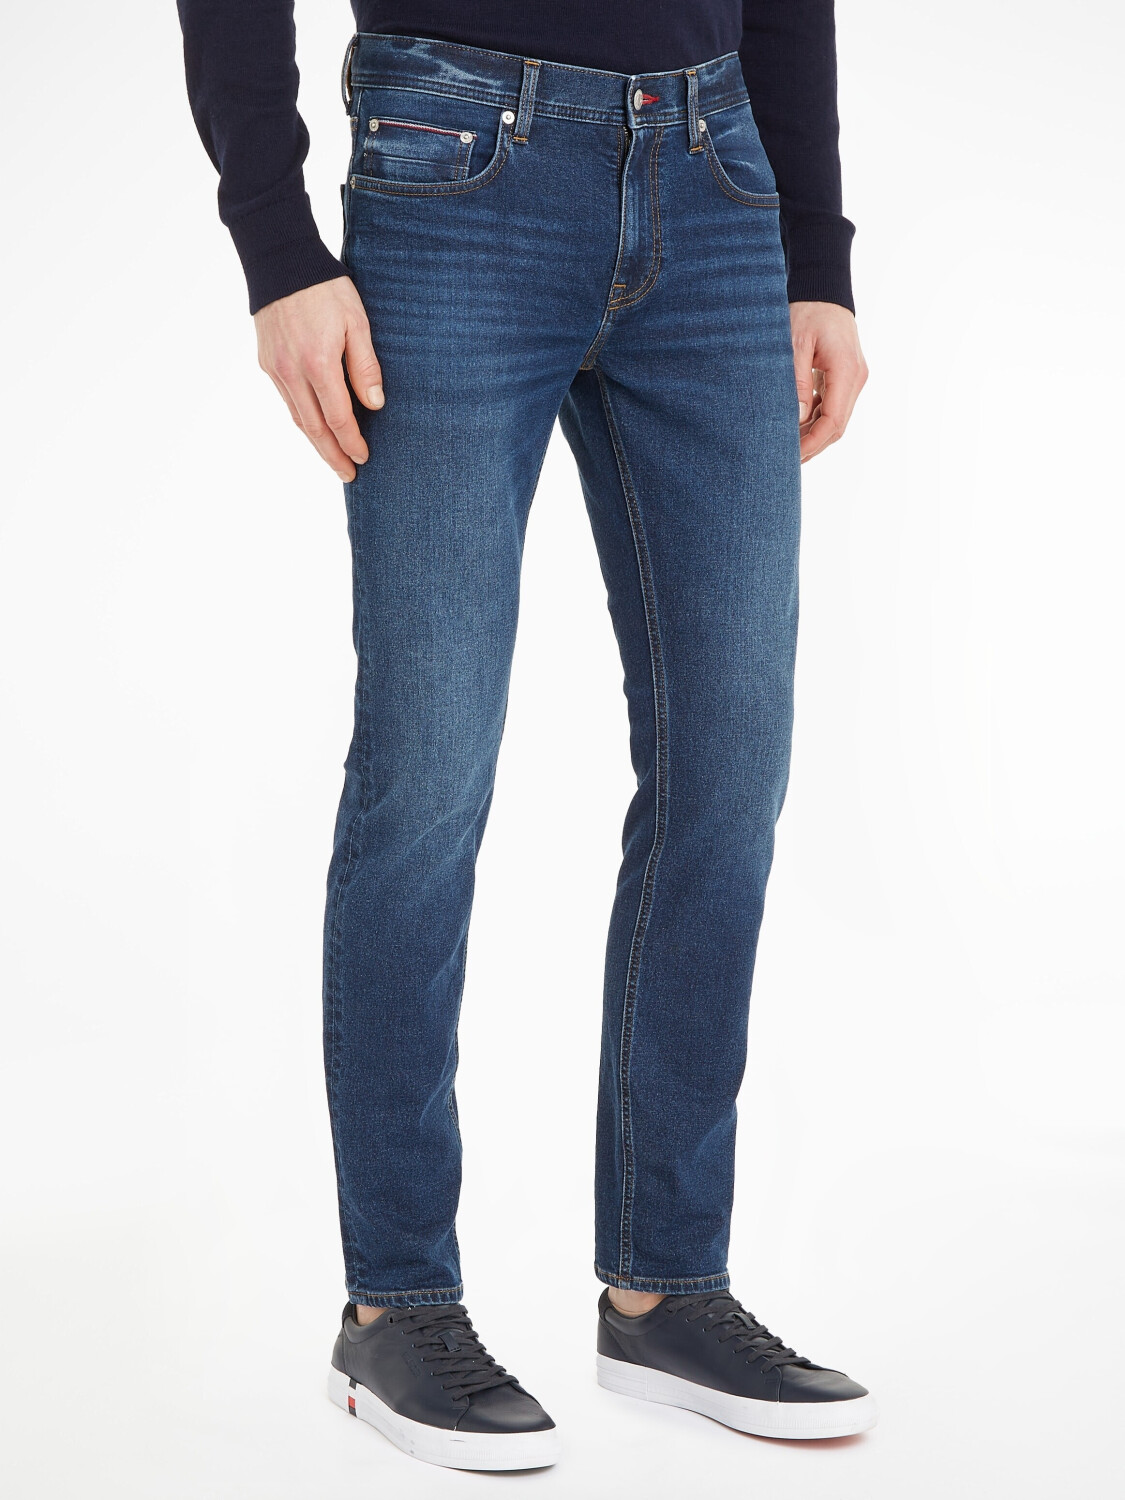 Tommy Hilfiger Denton Straight Faded Jeans (MW0MW33375) sterne ab 40,58 € |  Preisvergleich bei